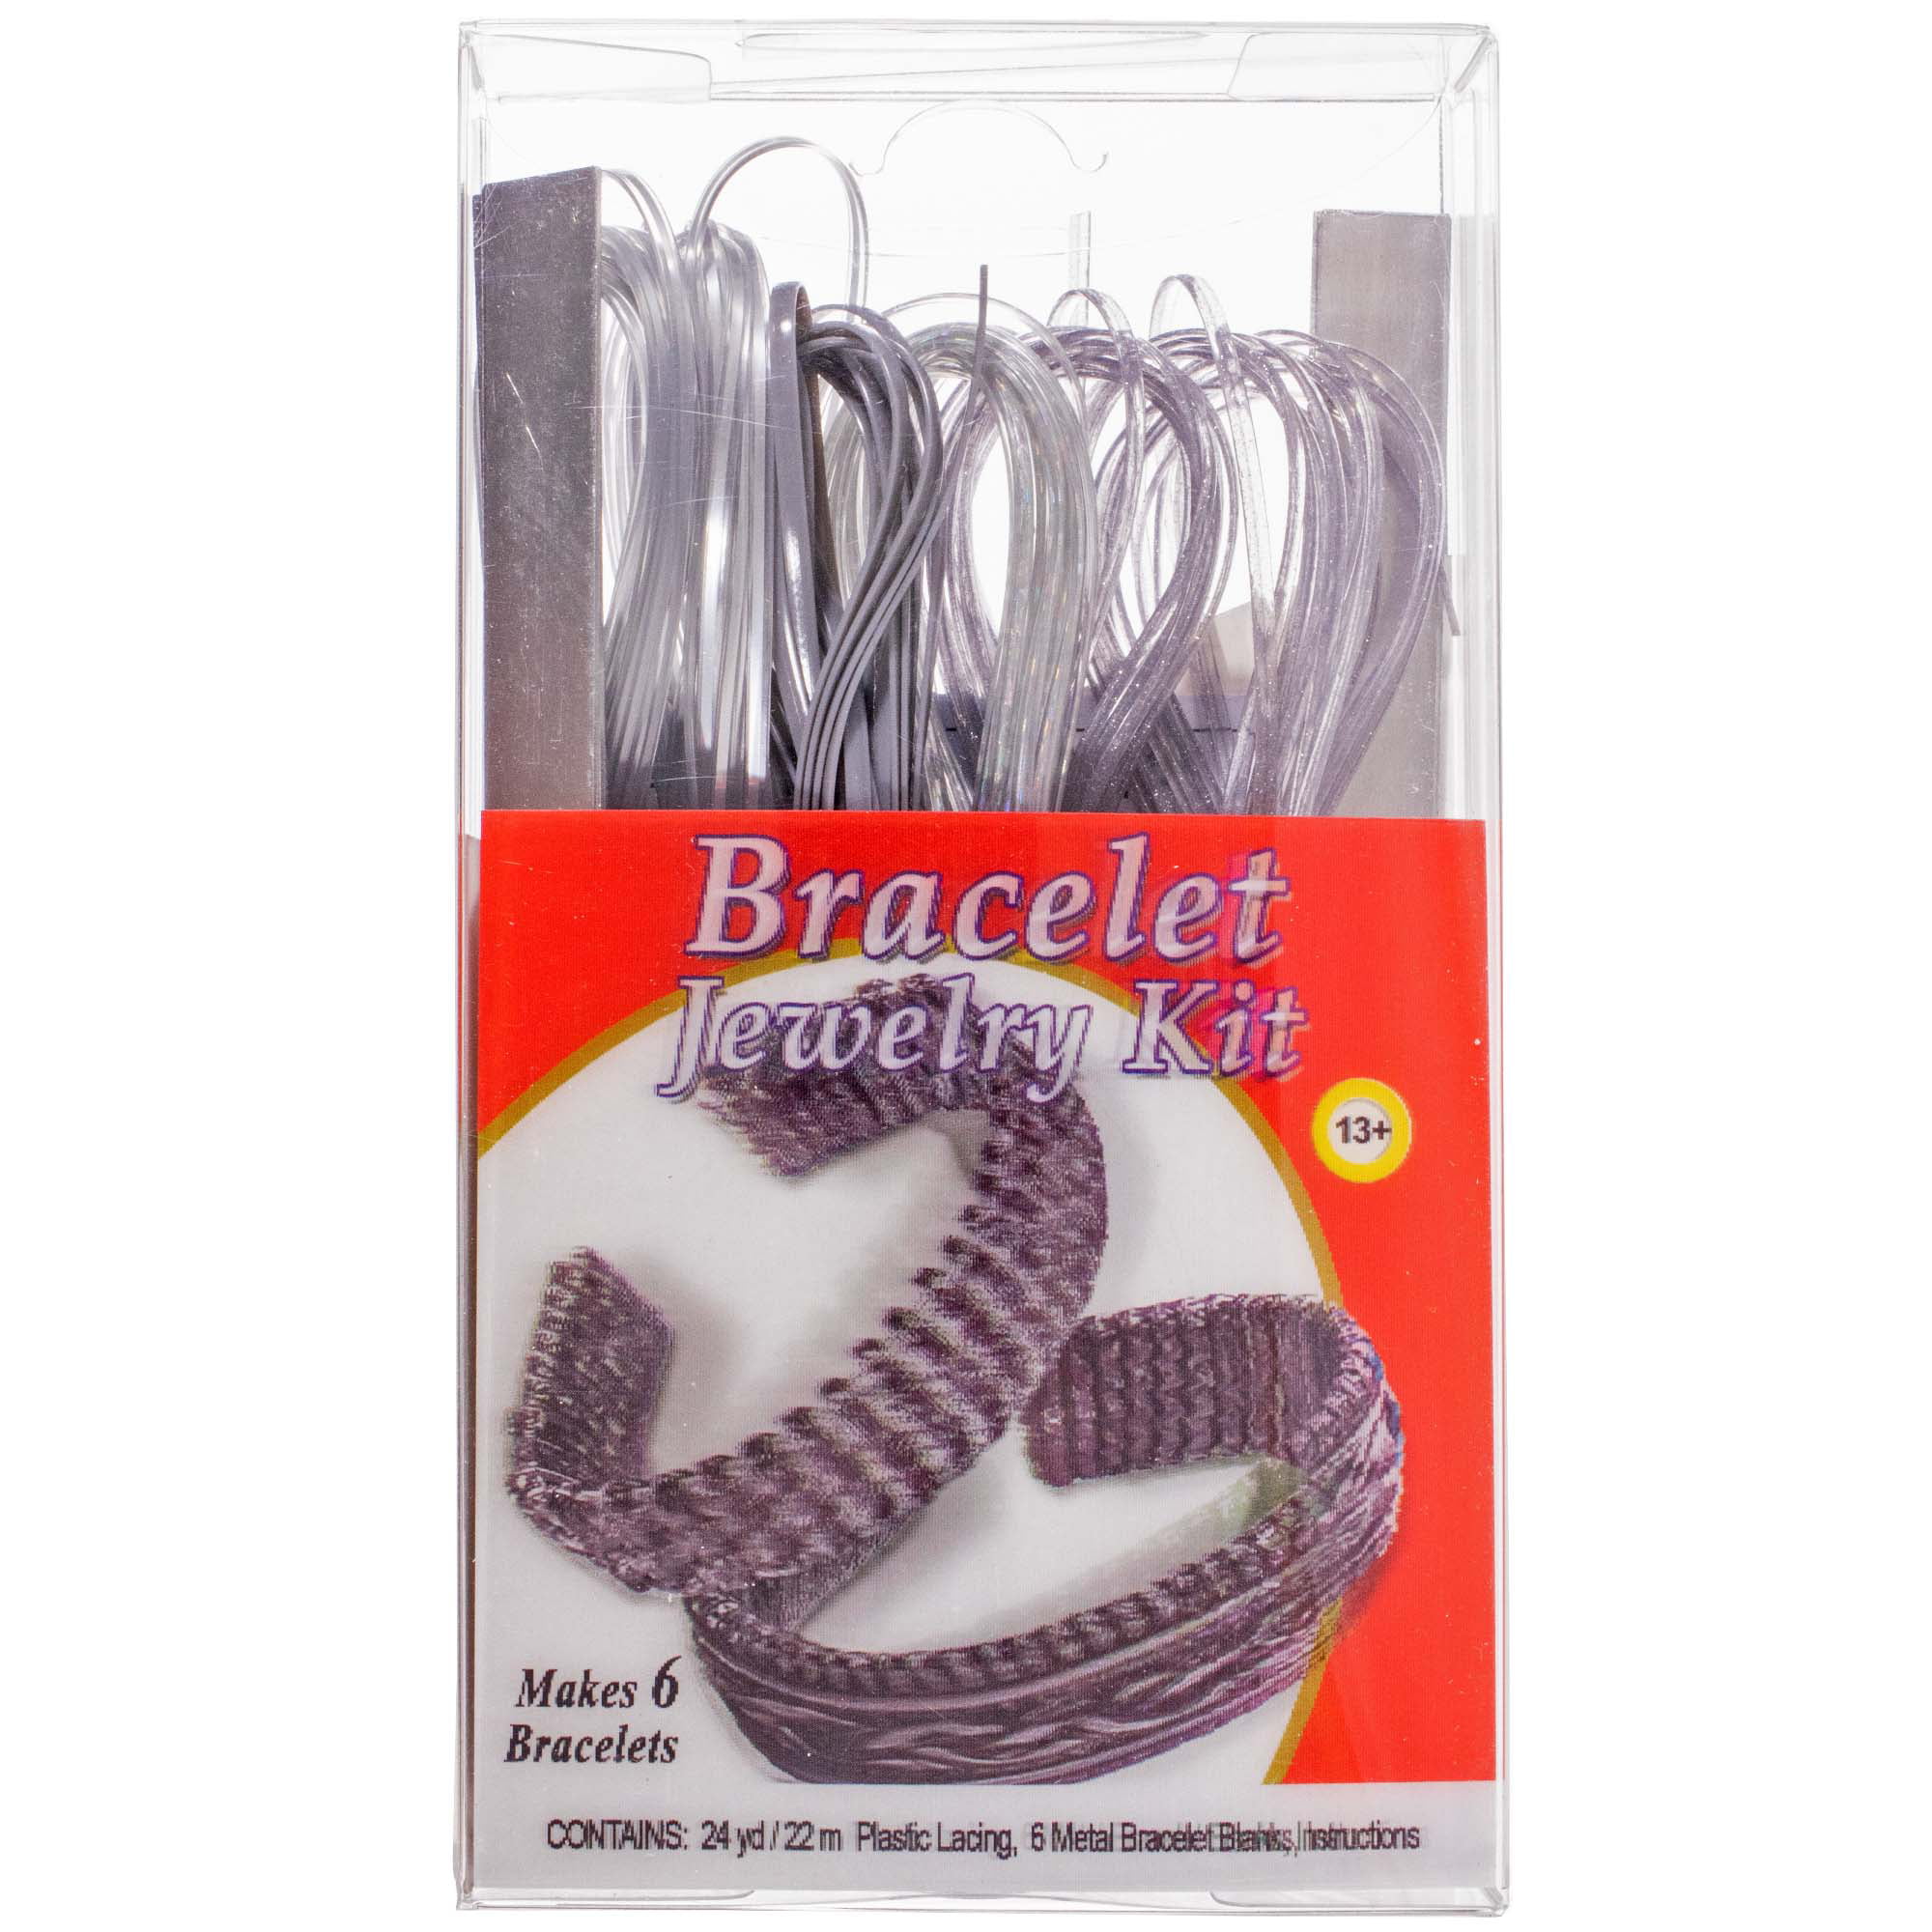 R/W/B Paracord Bracelet Craft Kit- Craft Kits - 12 Pieces 